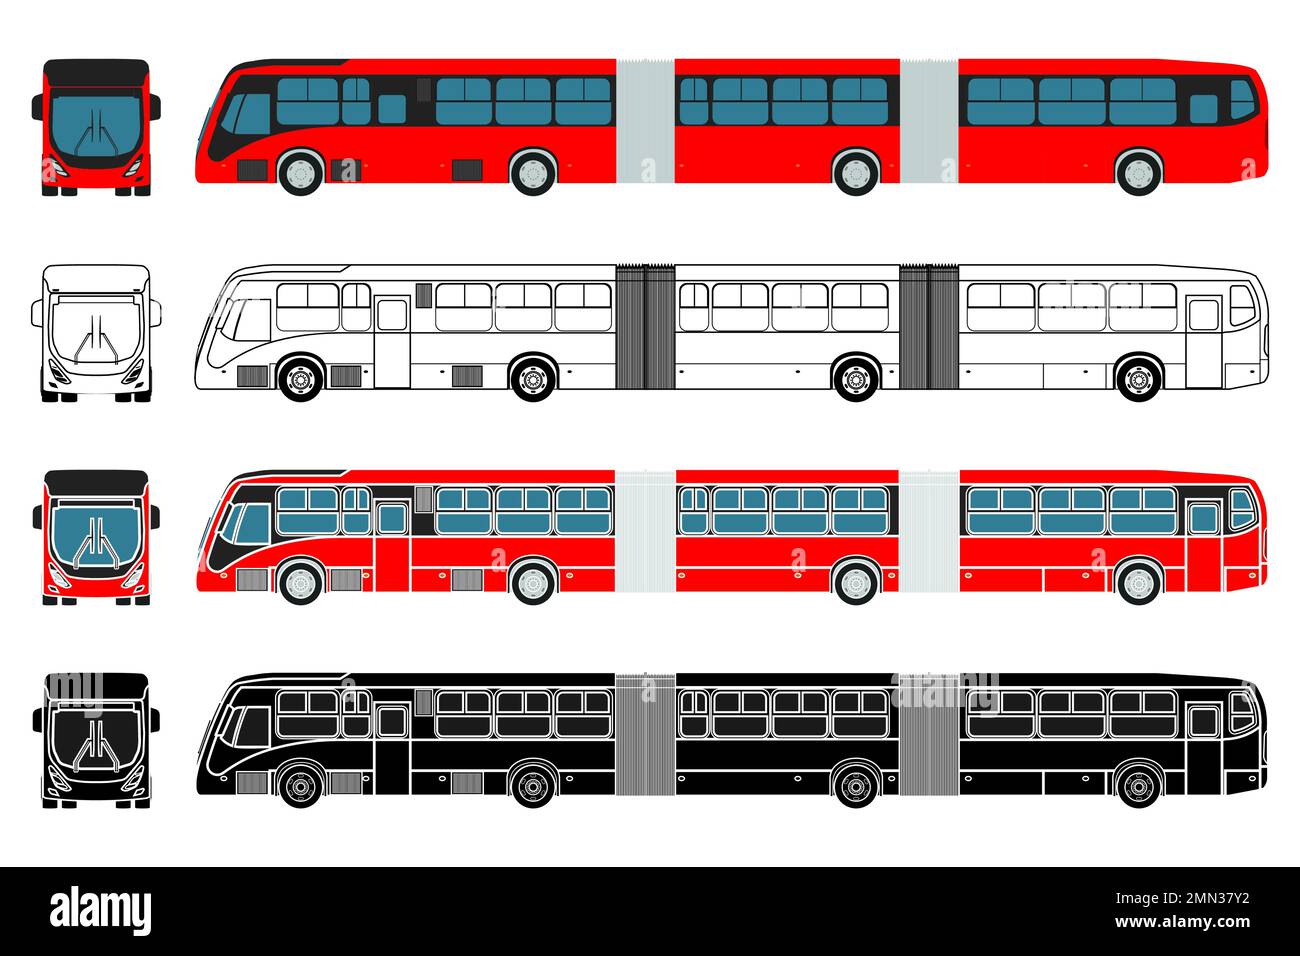 Bus model of Curitiba, Brazil Stock Vector